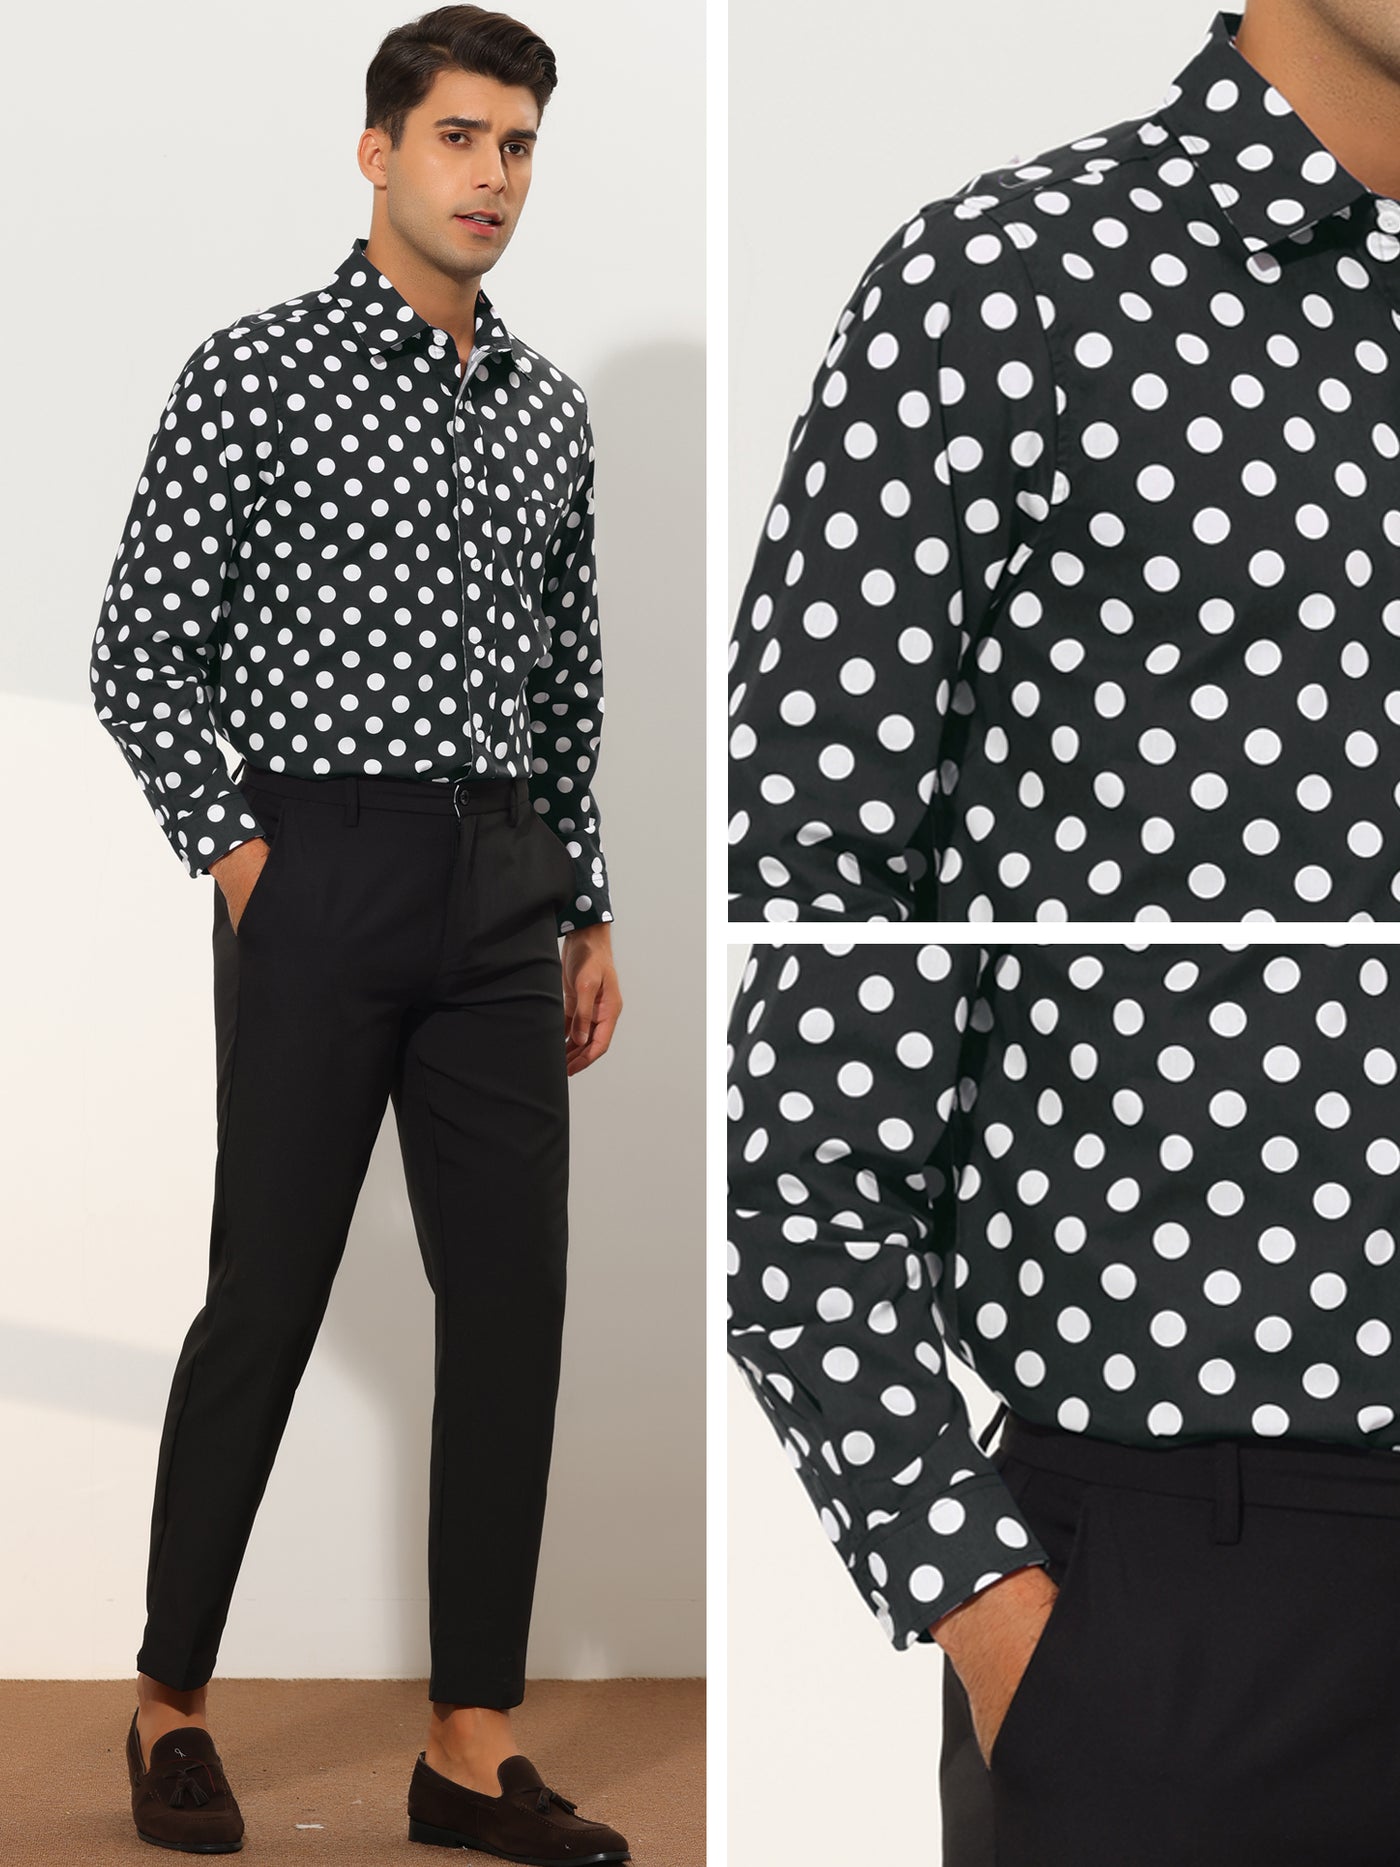 Bublédon Polka Dots Dress Shirt for Men's Button Down Long Sleeve Casual Business Shirts